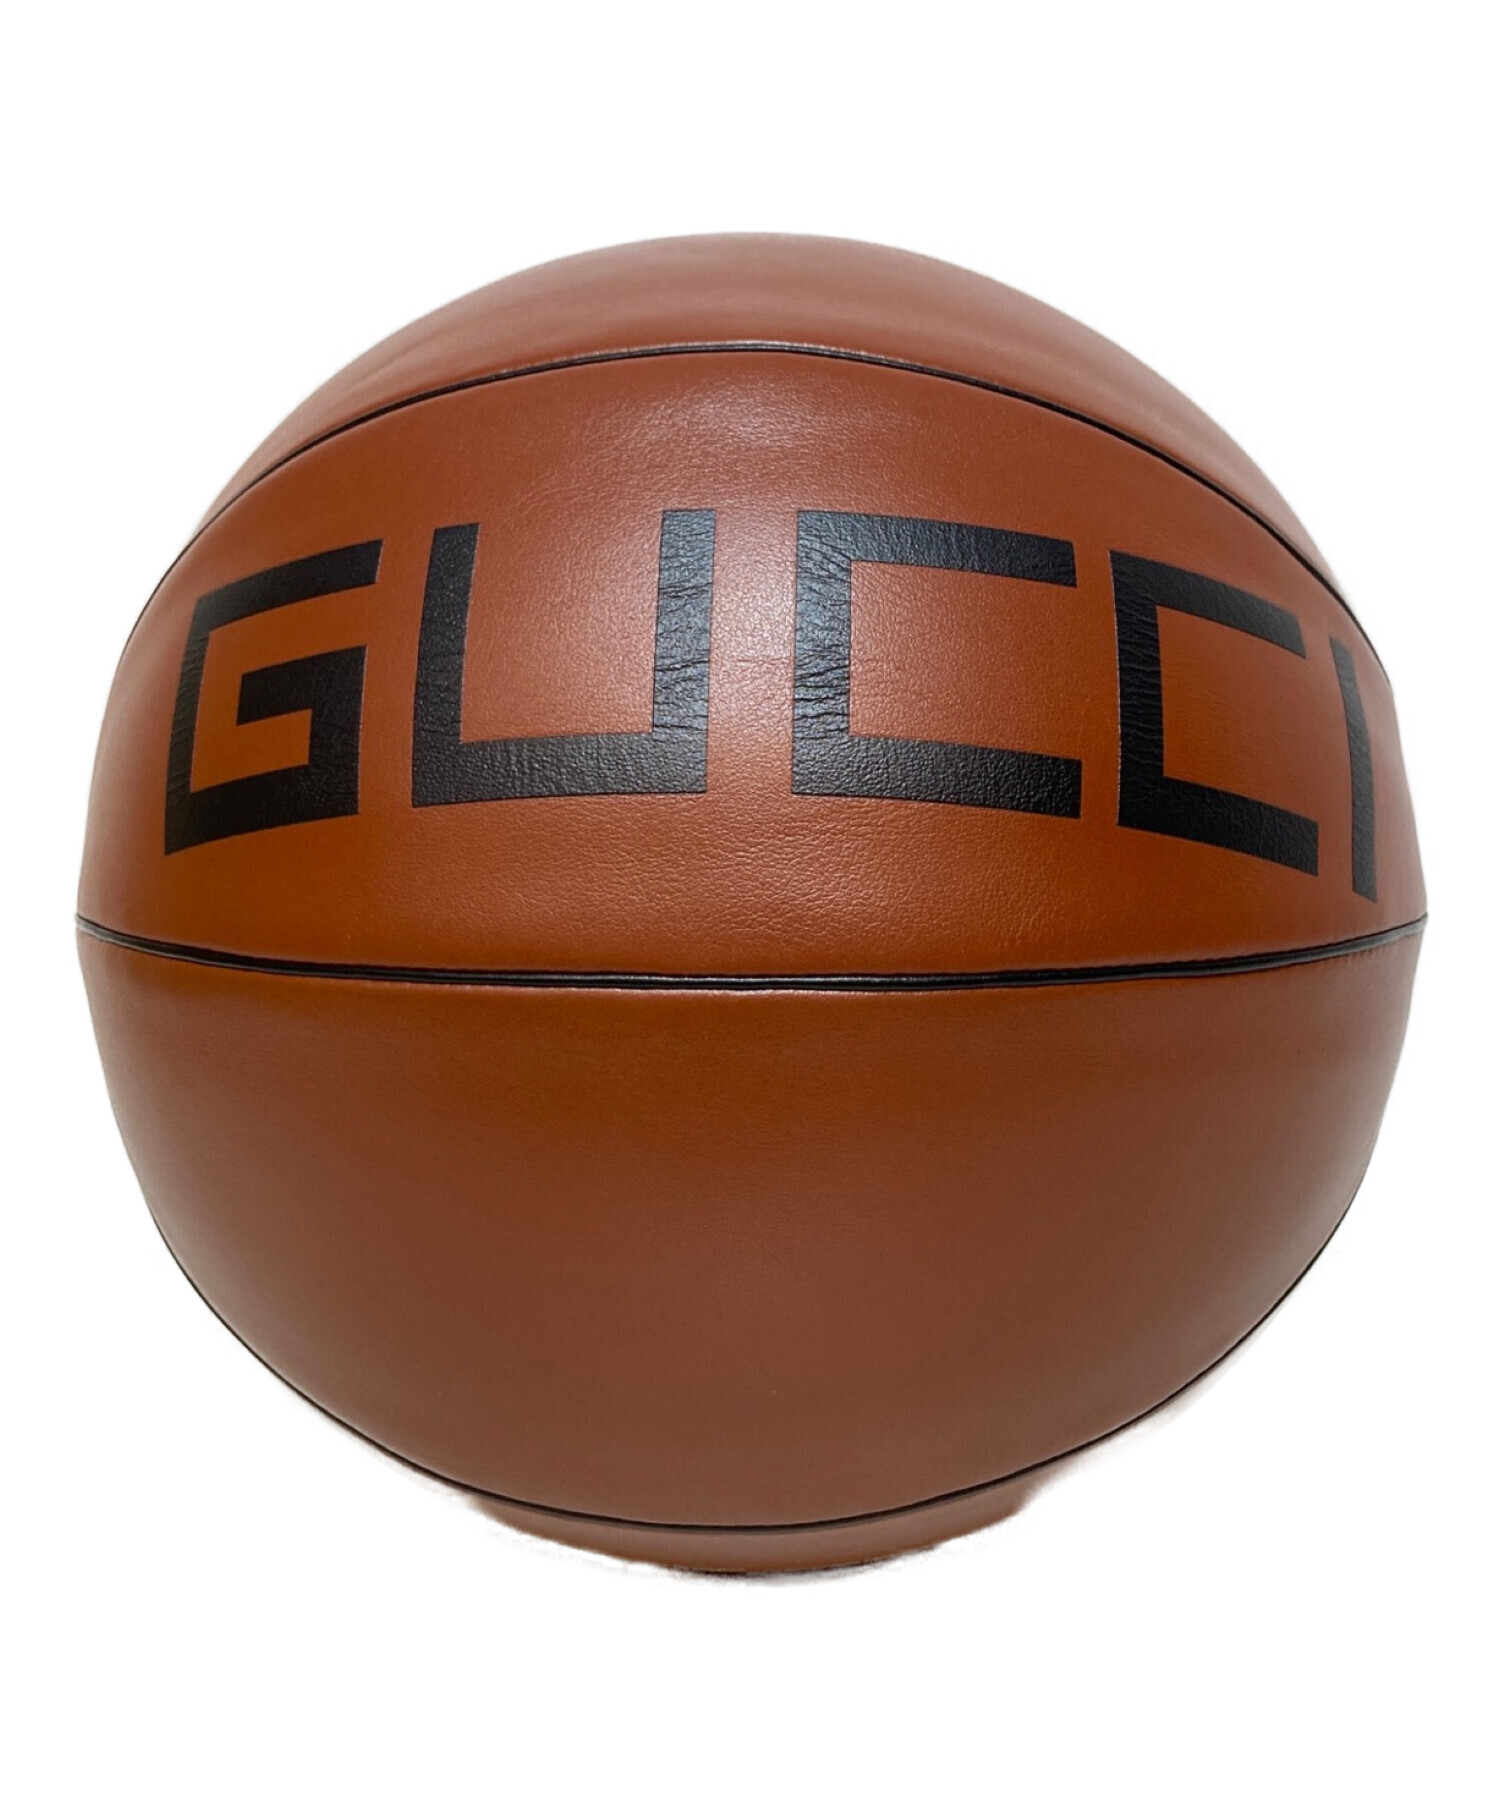 GUCCI (グッチ) ロゴ バスケットボール Decorative basketball with Gucci logo ブラウン